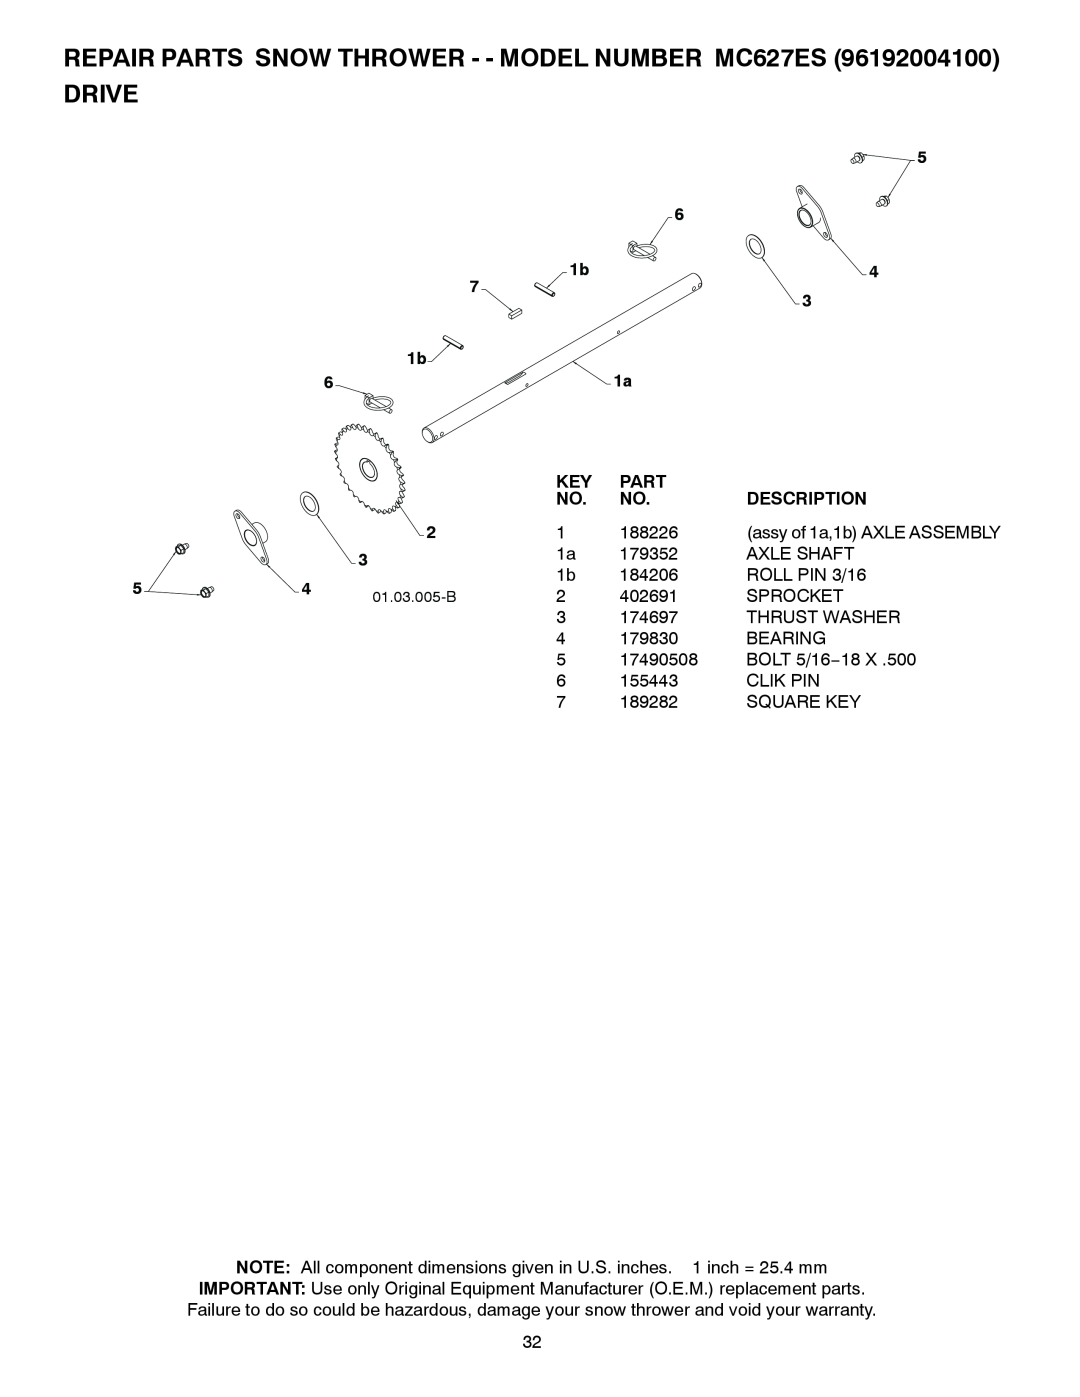 McCulloch 96192004100 owner manual REPAIR PARTS SNOW THROWER - - MODEL NUMBER MC627ES DRIVE, Part, Description, 01.03.005-B 